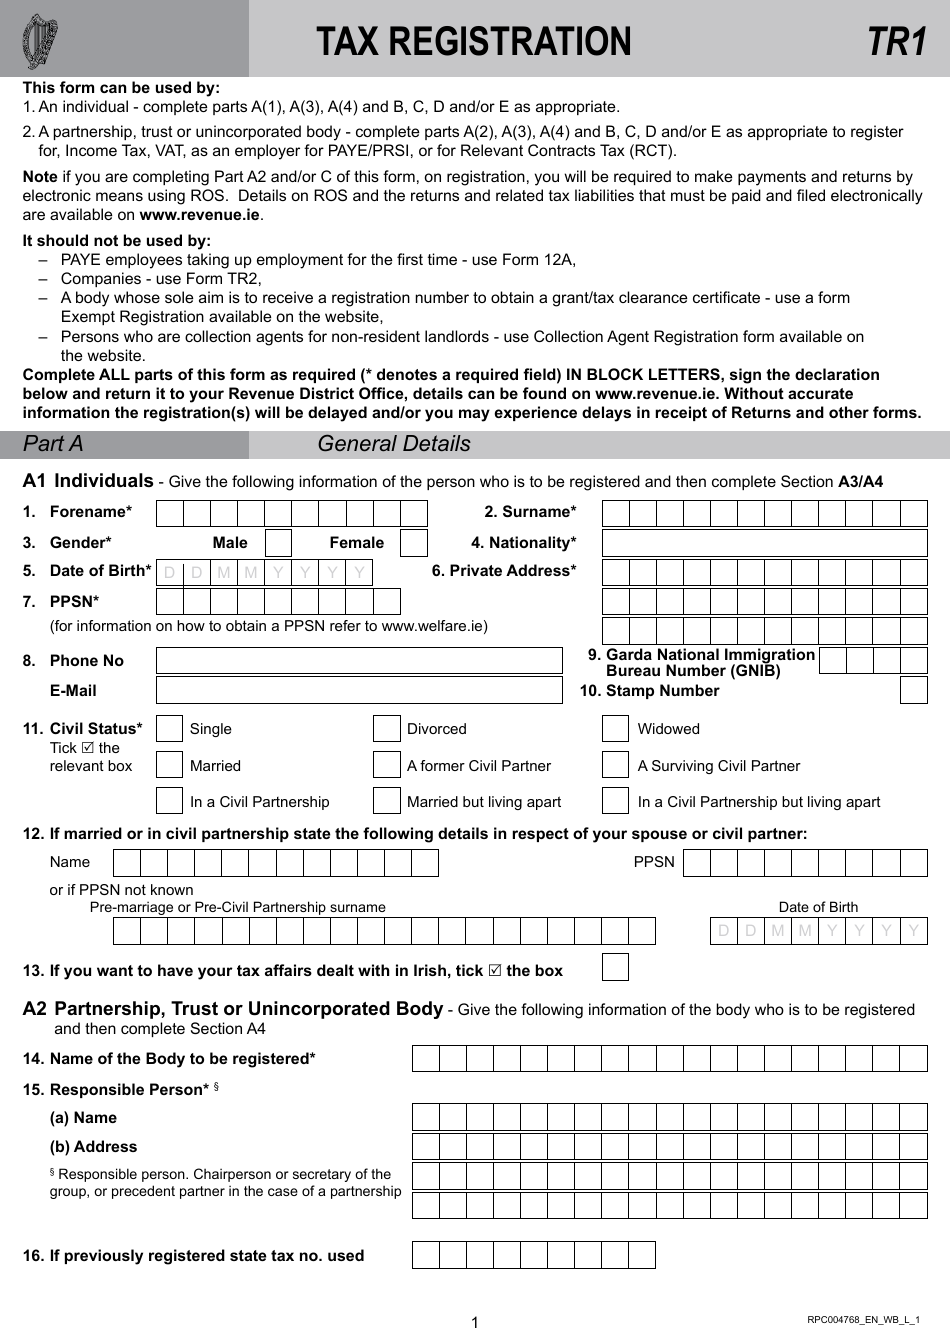 Form TR1 Tax Registration - Ireland, Page 1